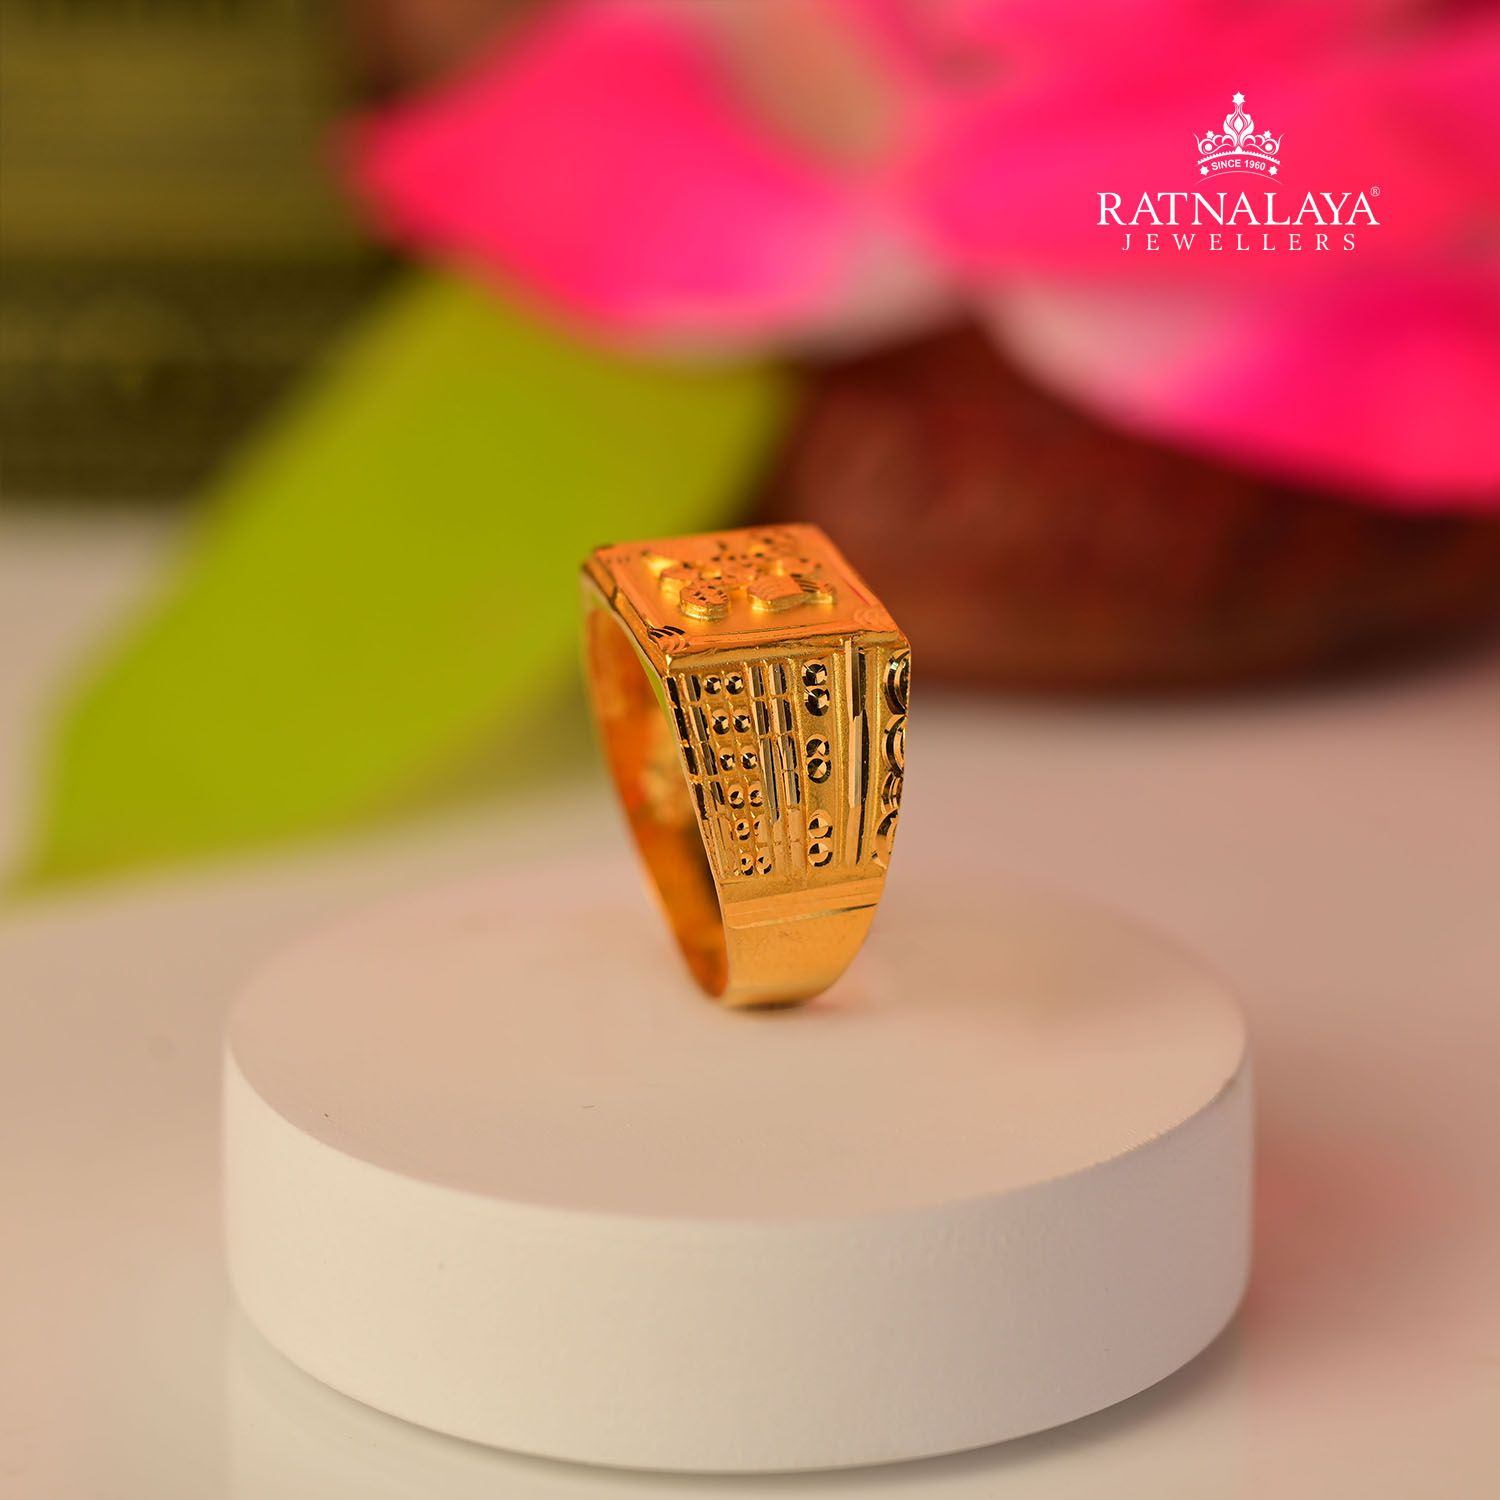 Magnificent 22K Gold Gents Ring - GR-1669 - Rupashree Jewellers (RB)